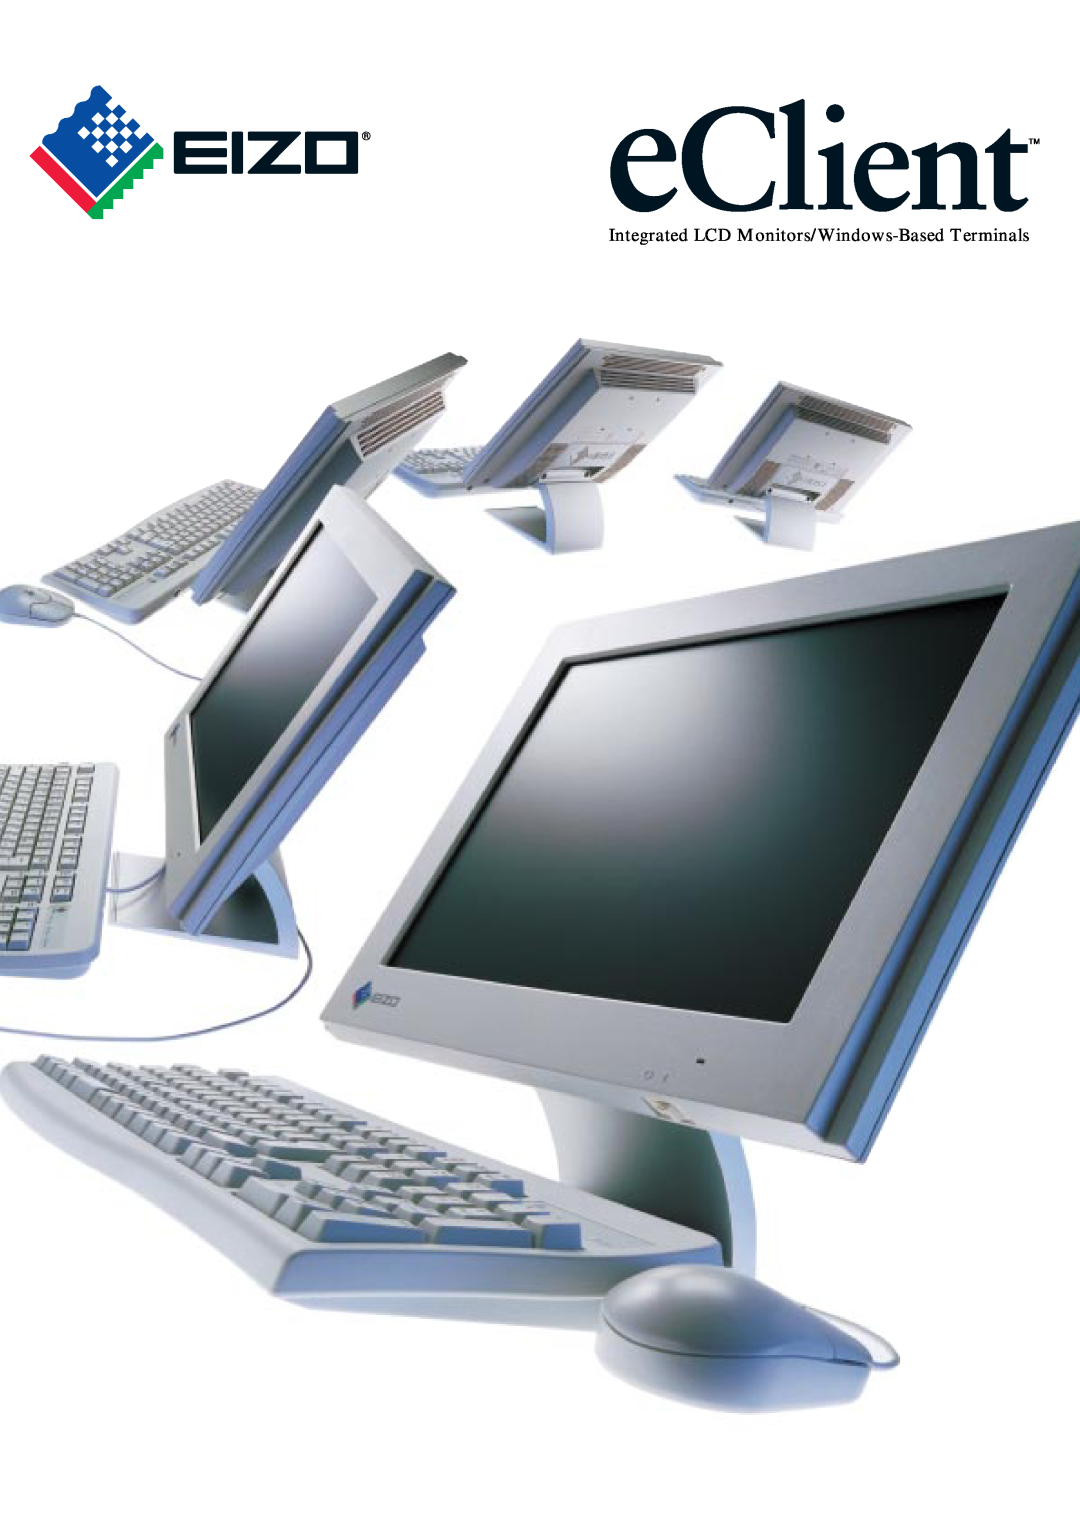 Eizo eClient manual Integrated LCD Monitors/Windows-Based Terminals 